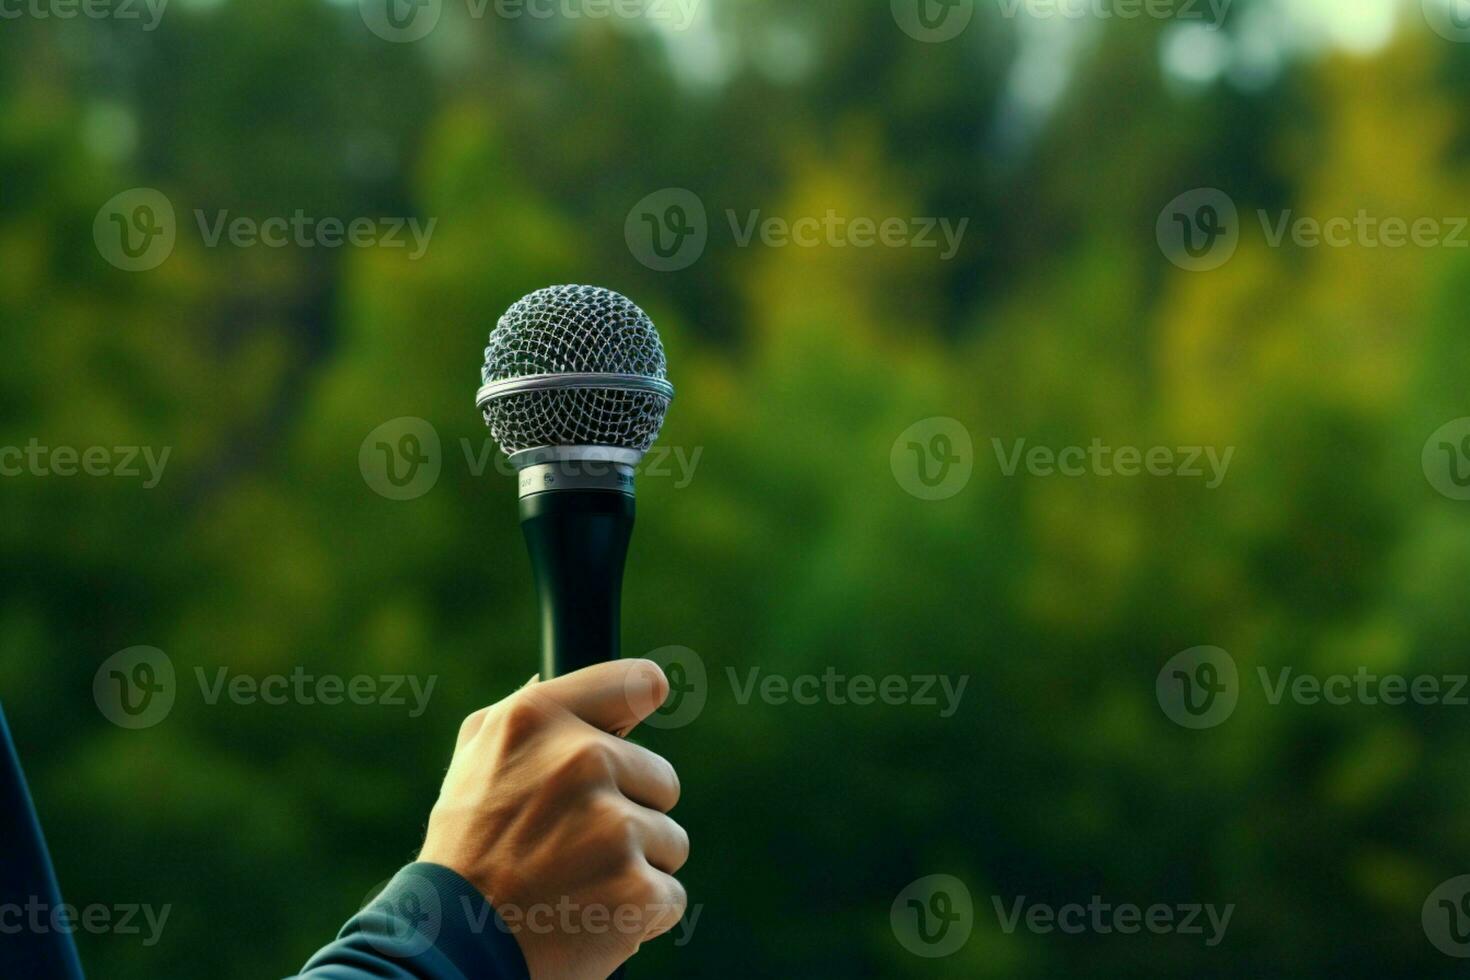 ai generiert Umwelt Stimme Hand hält Mikrofon gegen Grün Wald Hintergrund foto